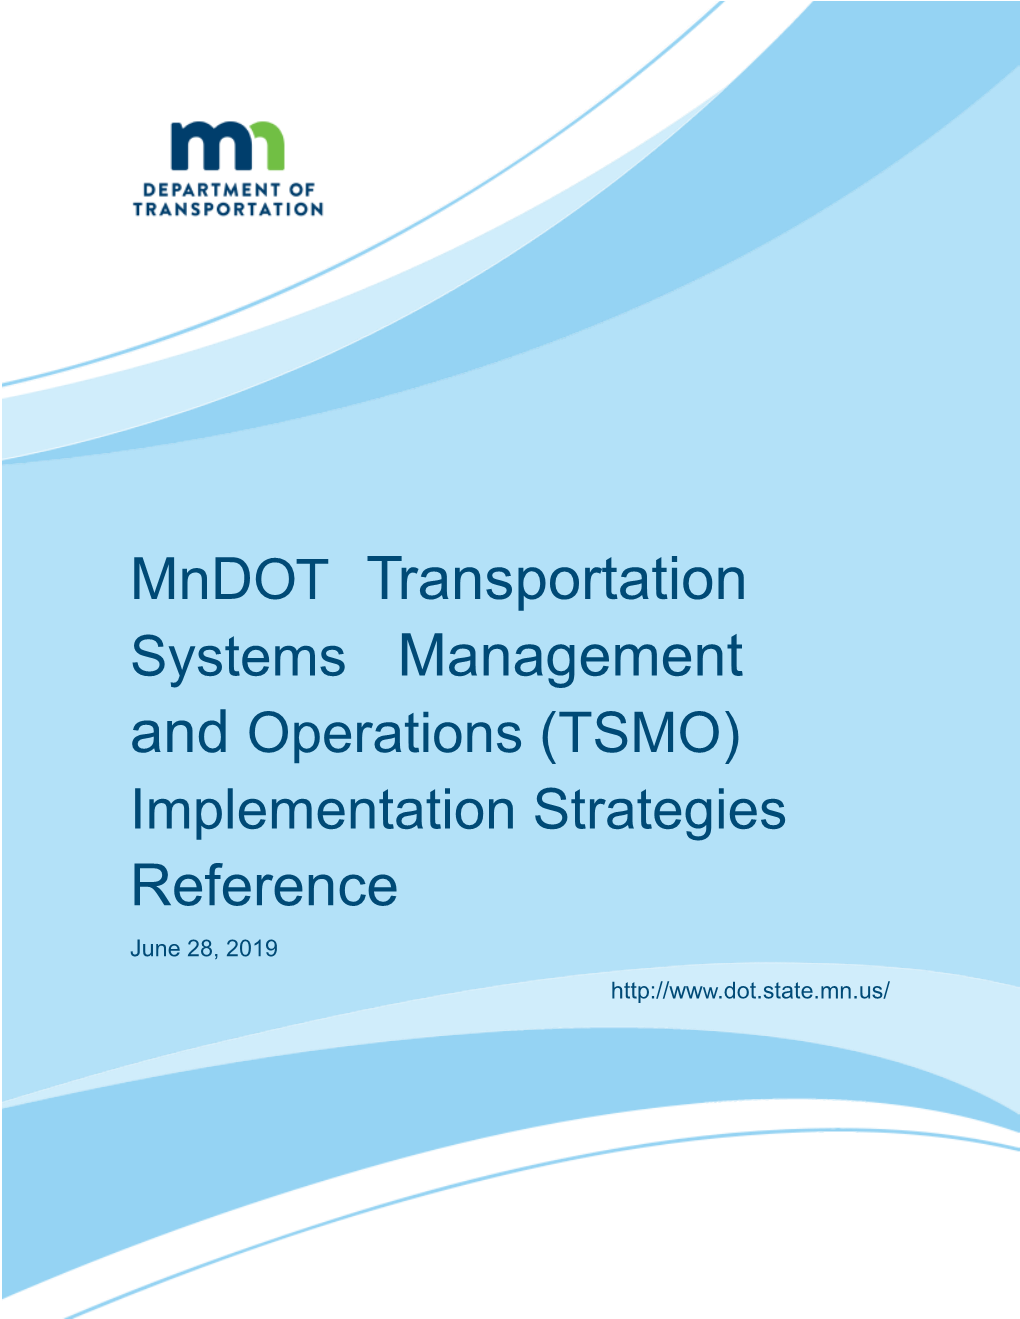 Mndot TSMO Implementation Strategies Reference